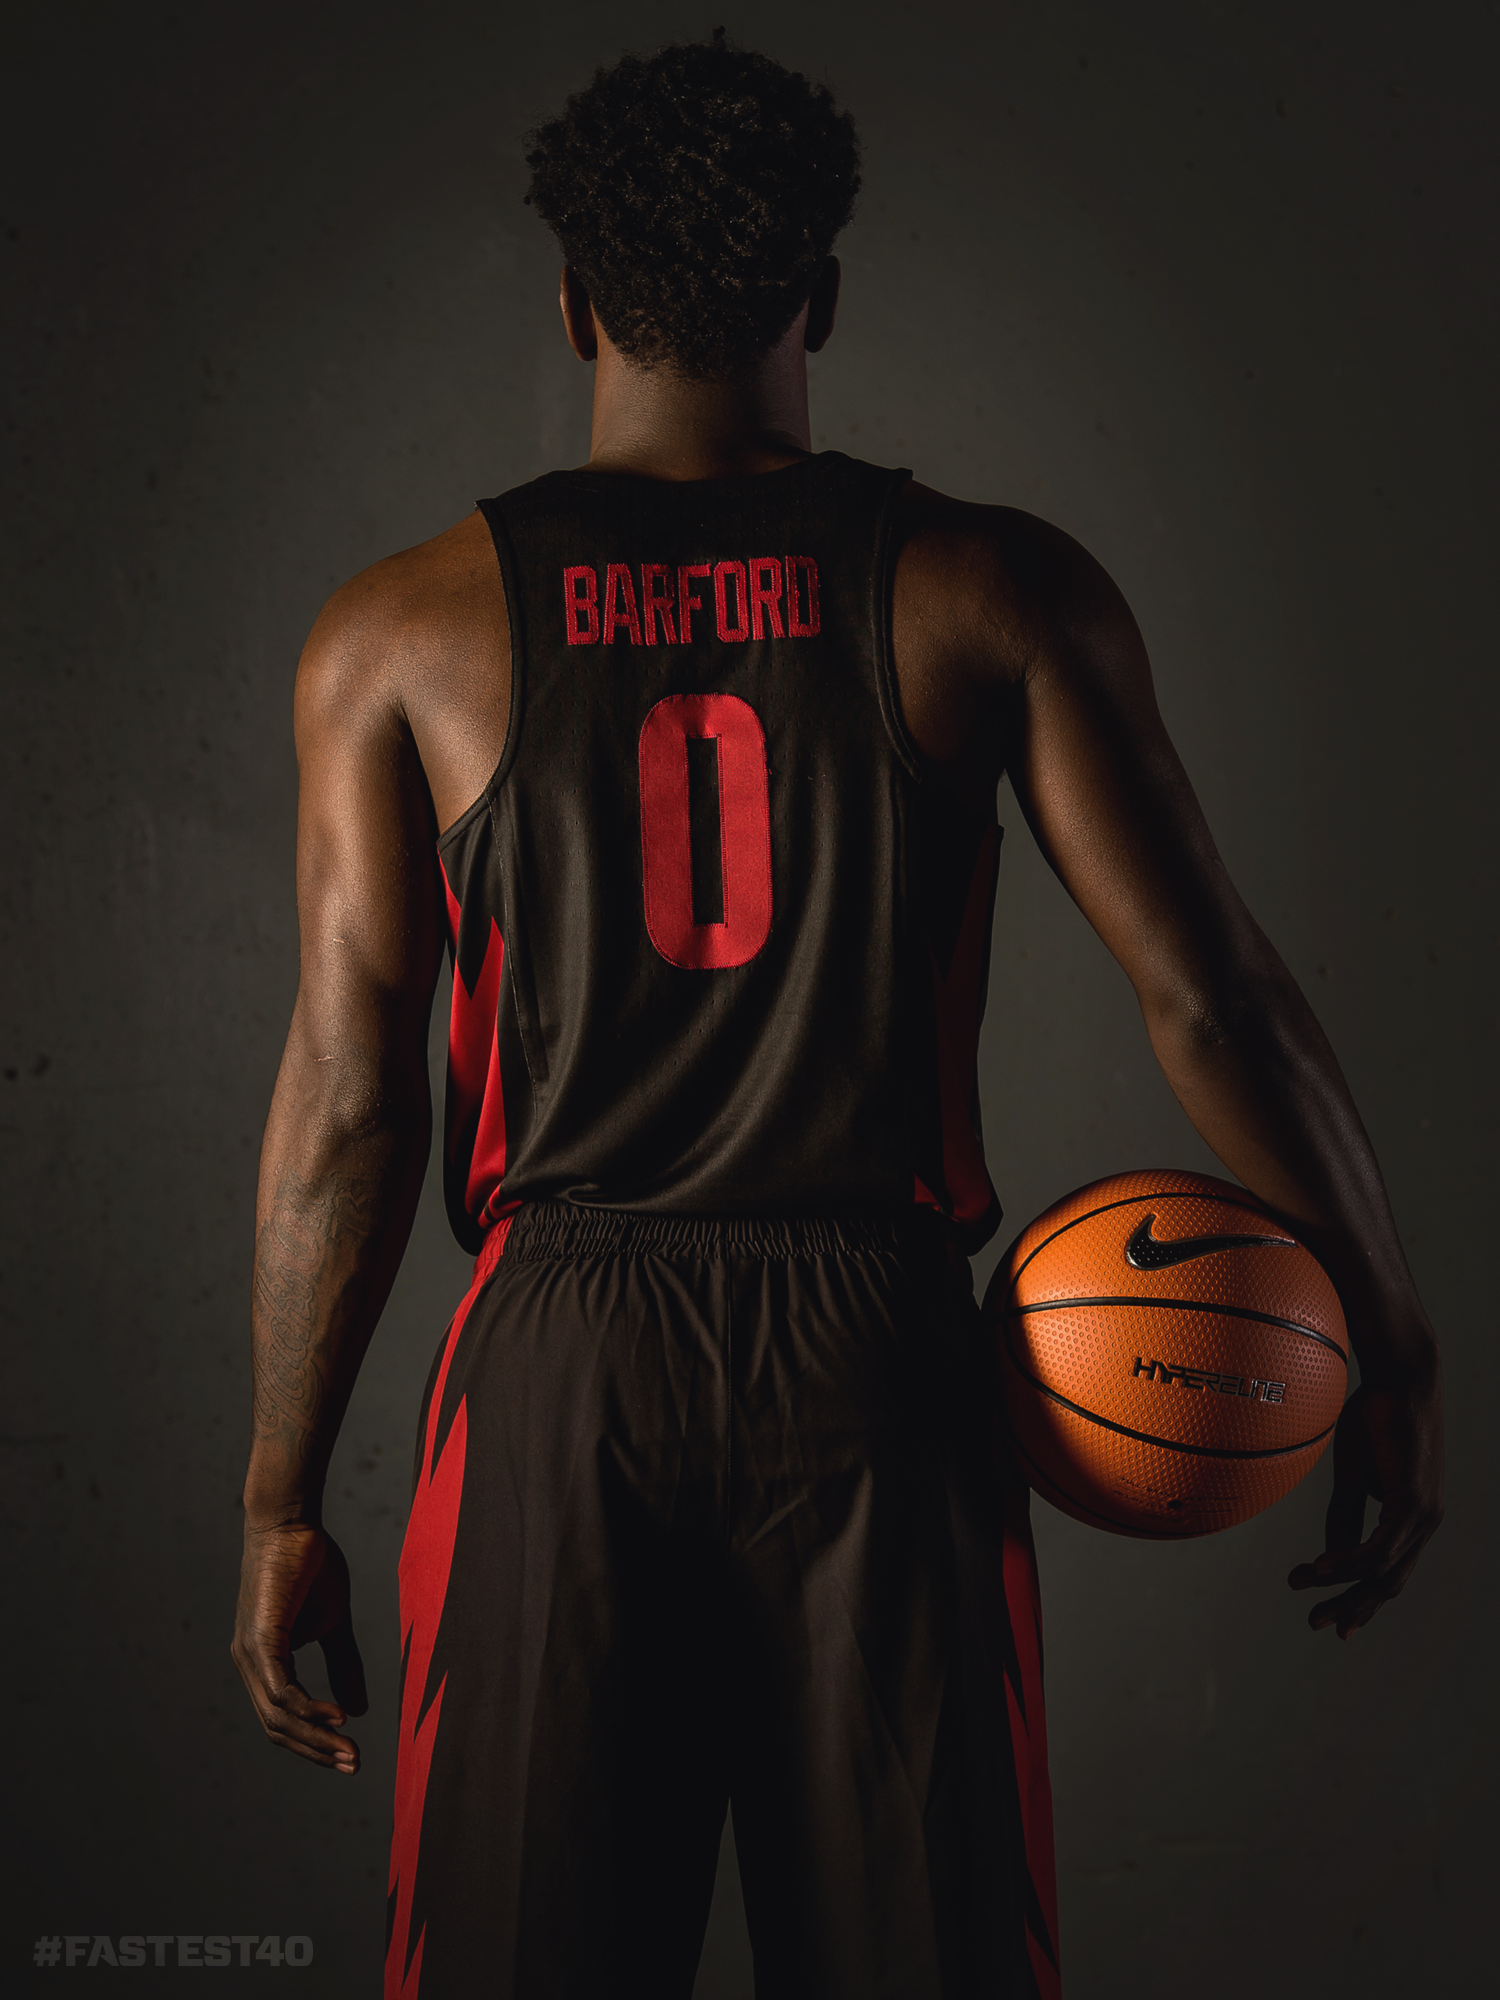 WholeHogSports - Nike unveils black Arkansas basketball jersey for